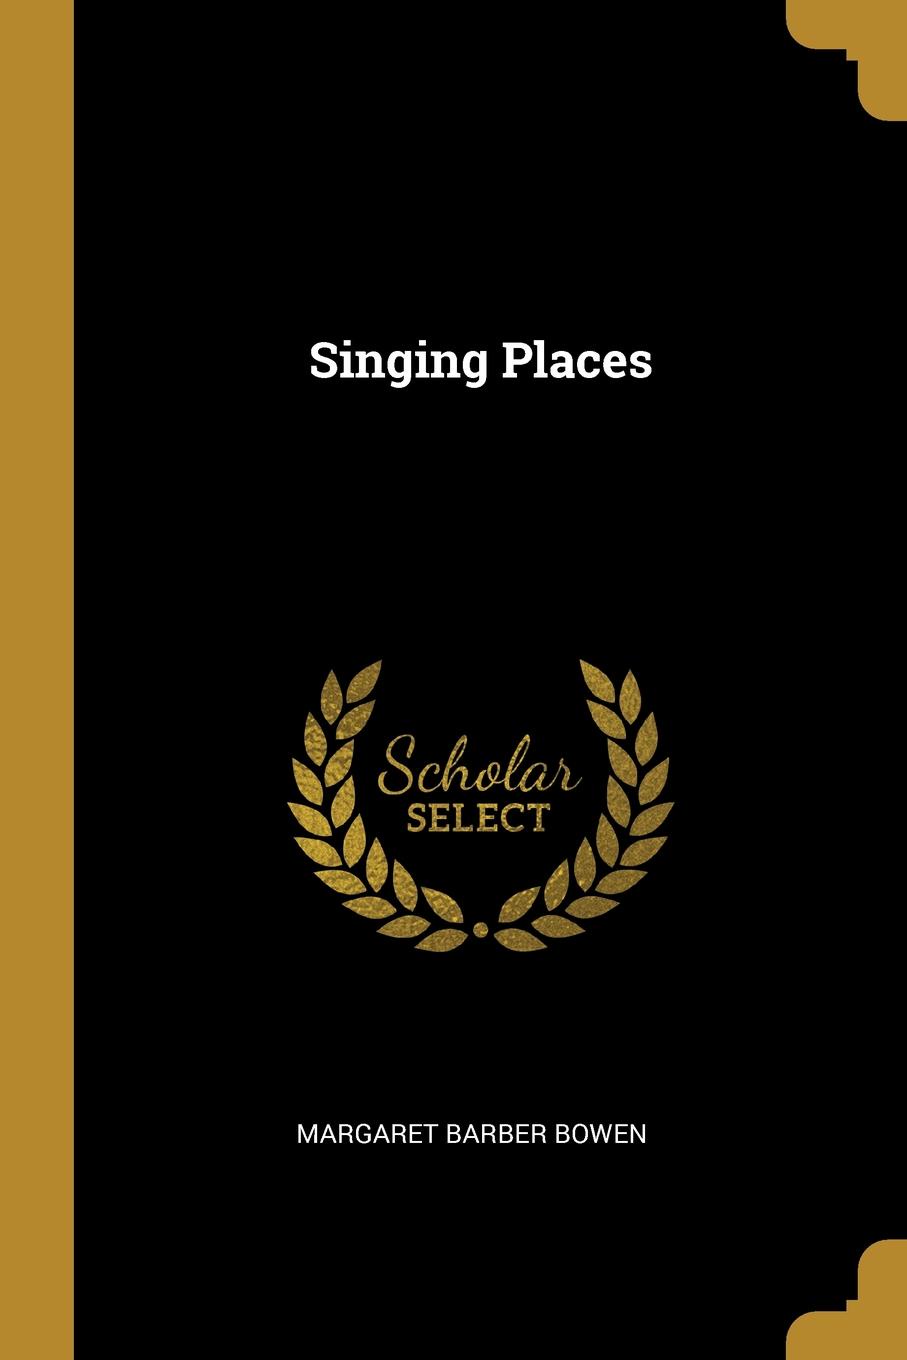 Singing Places